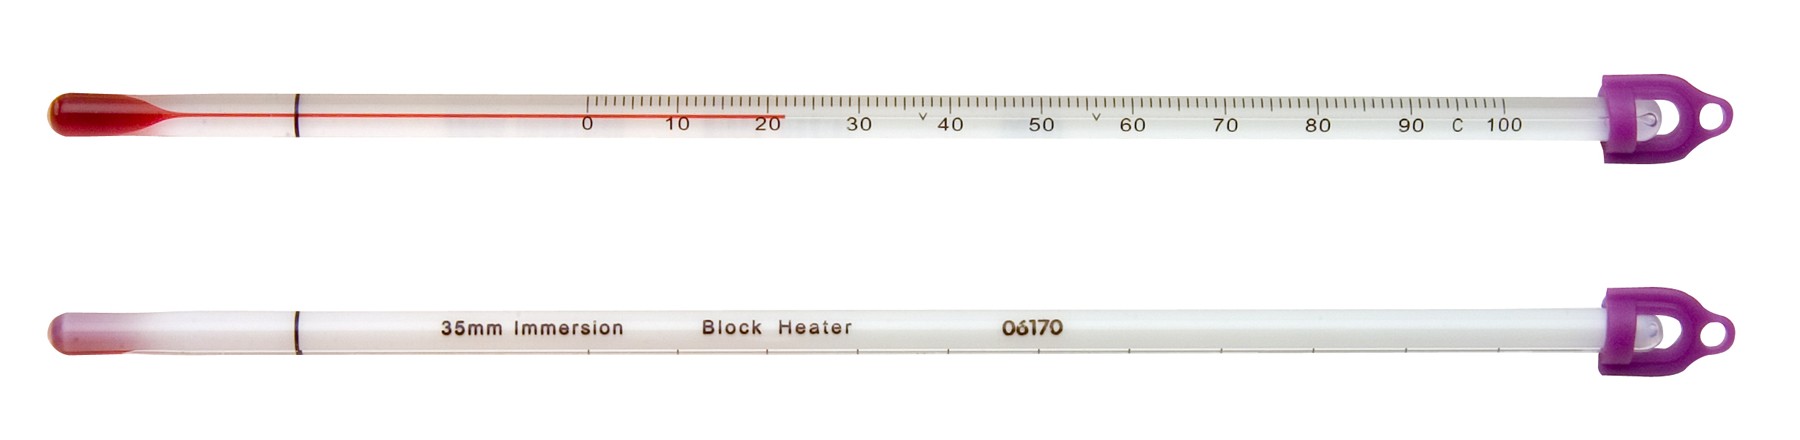 H-B DURAC Dry Block/Incubator Liquid-In-Glass Thermometers, Organic Liquid Fill